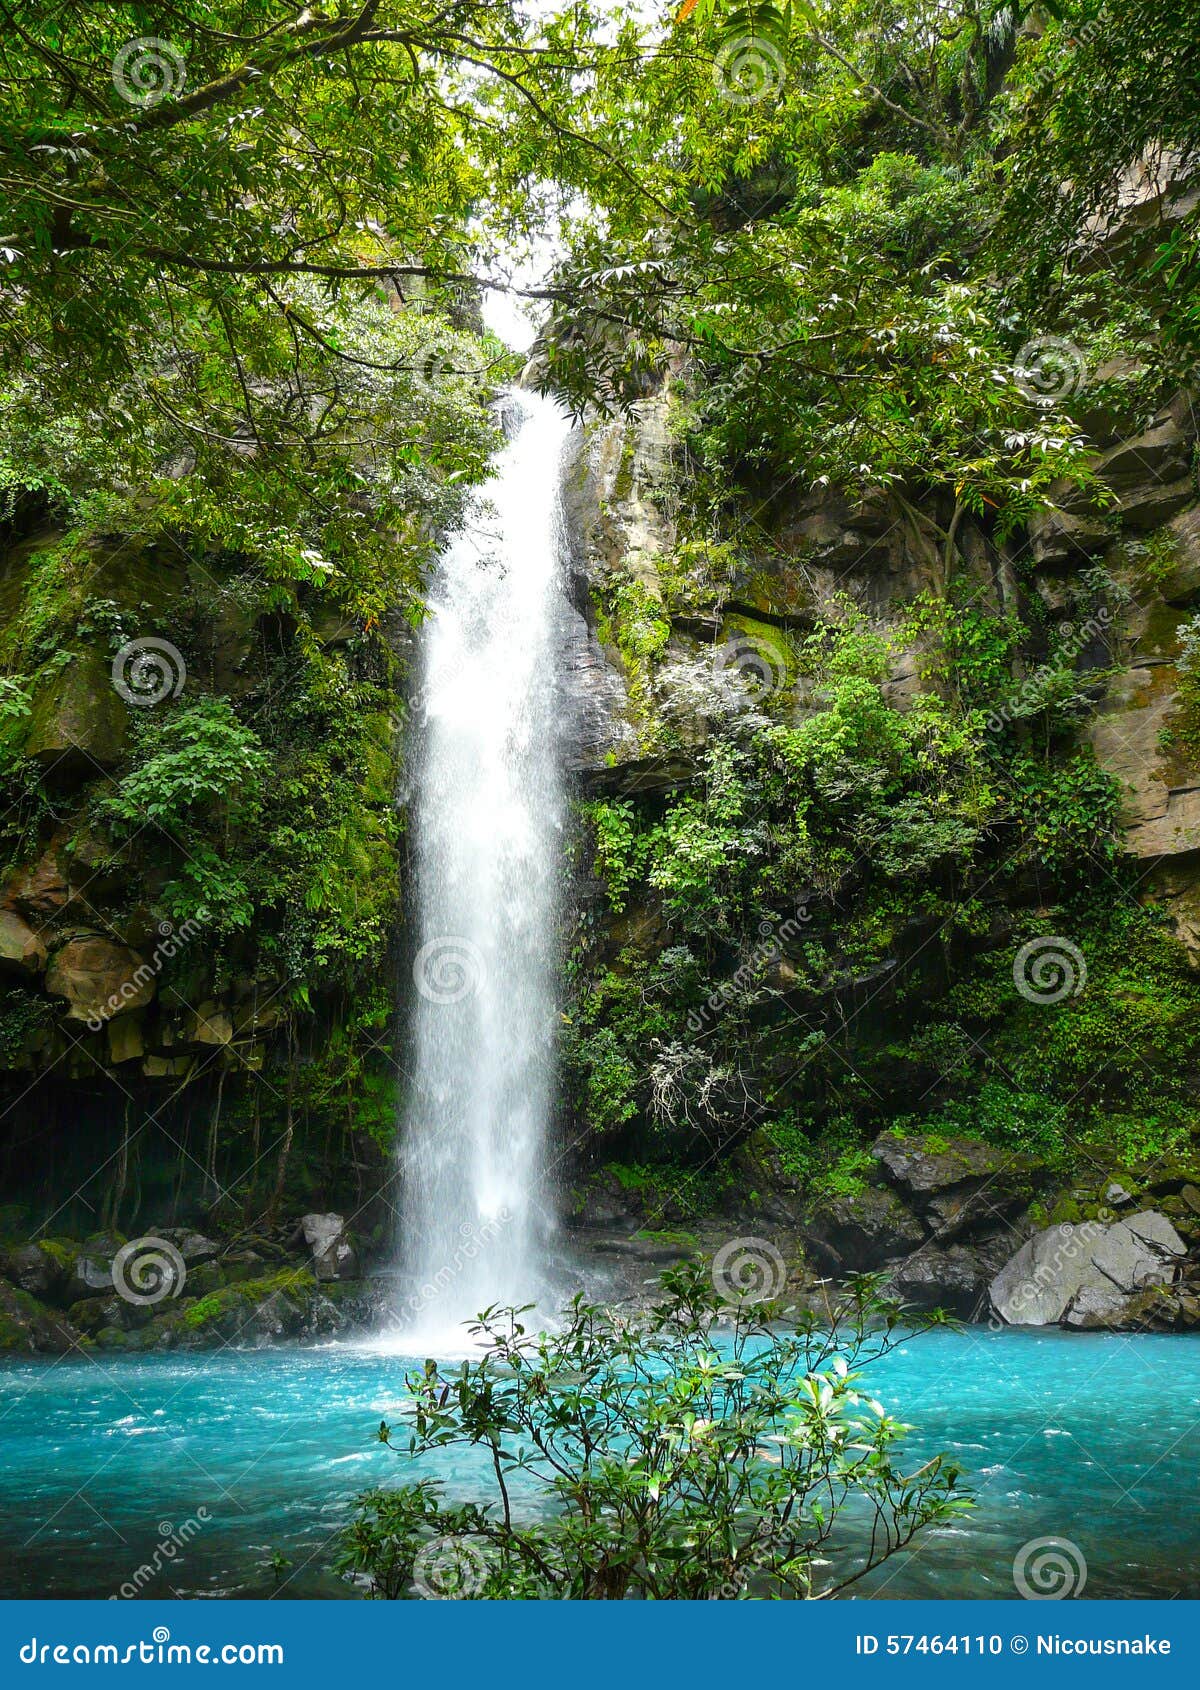 rio celeste waterfall